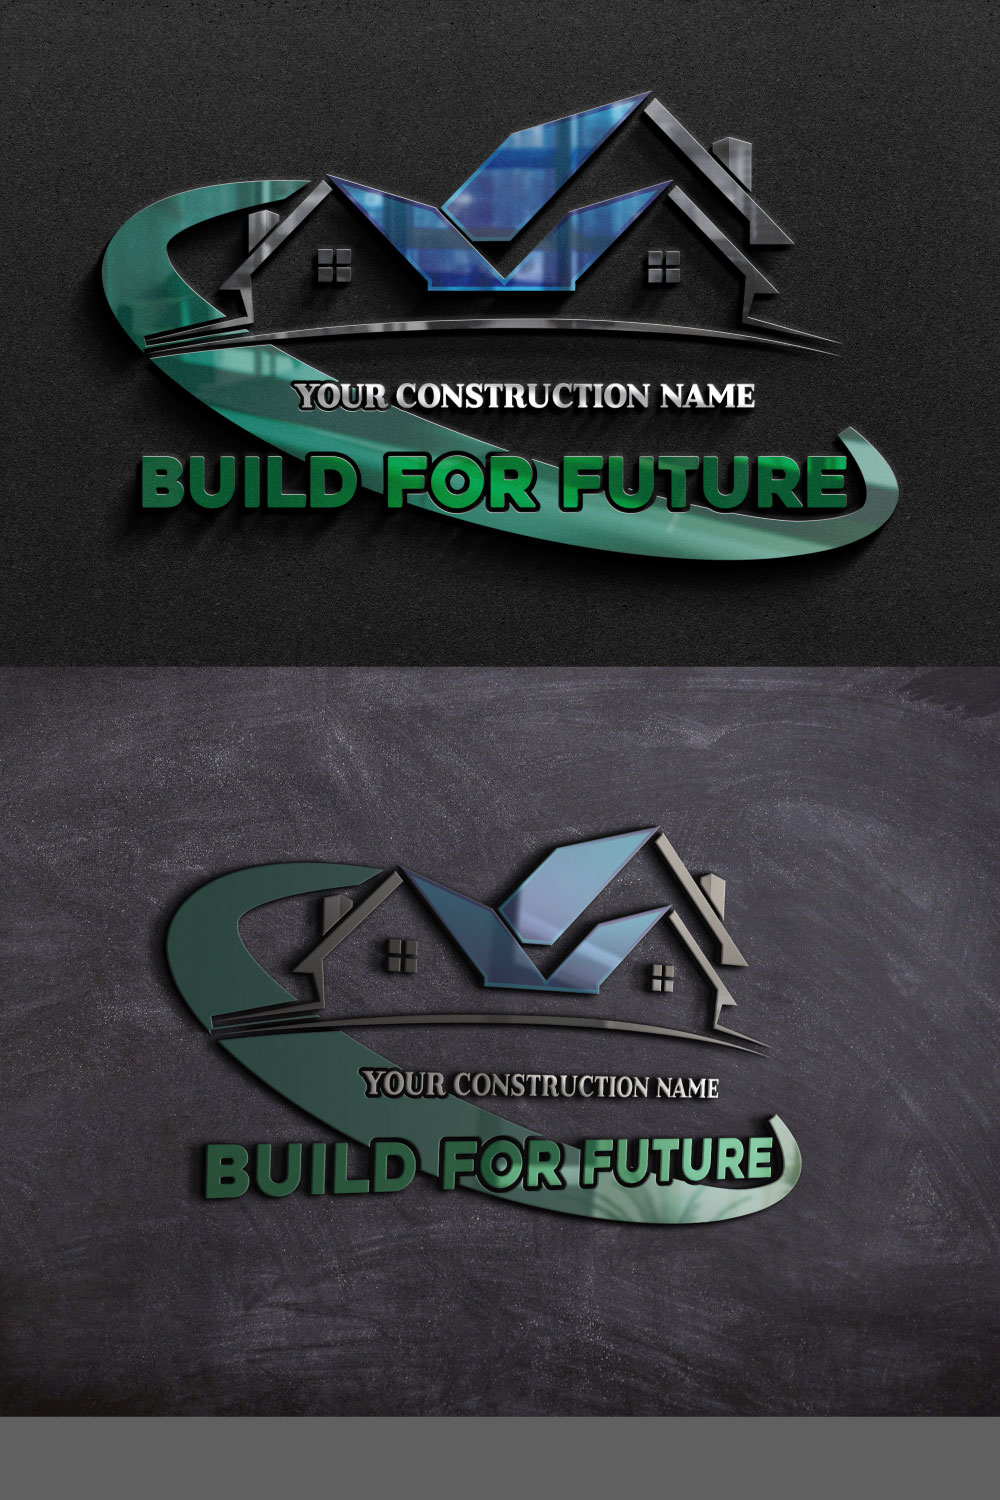 Construction logo design pinterest preview image.